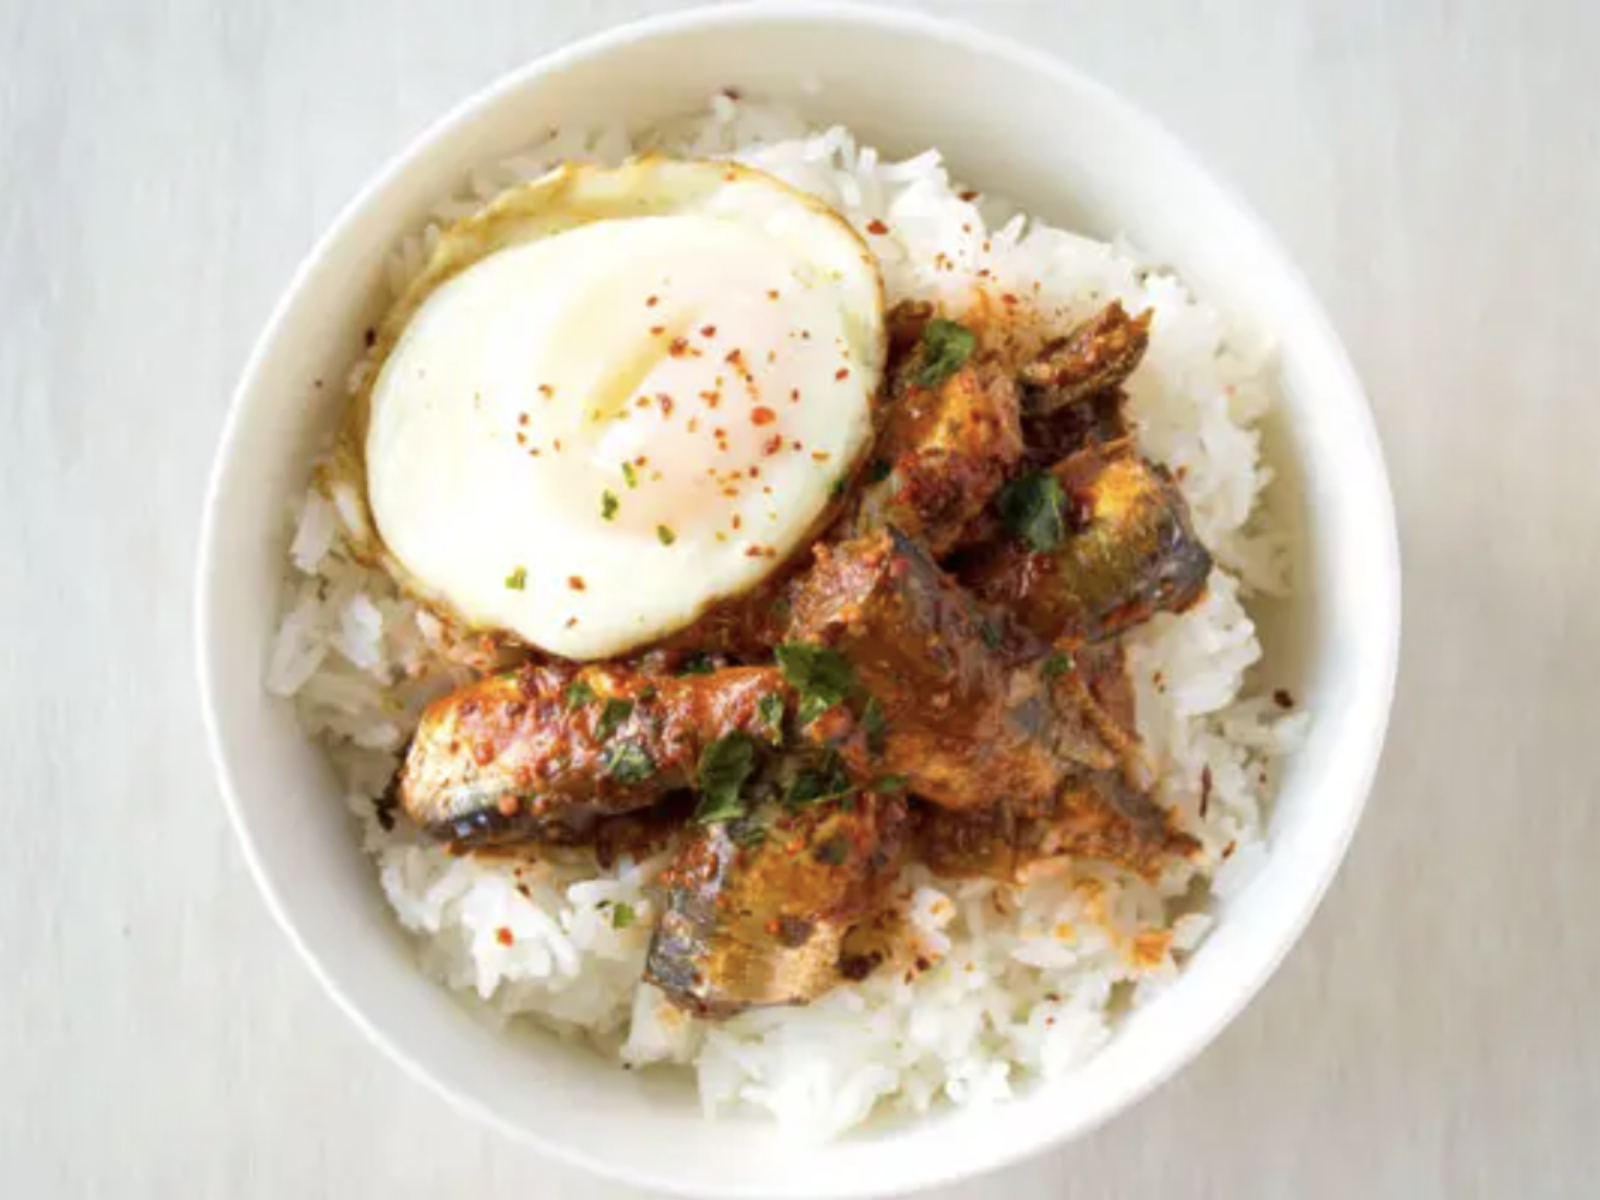 sardine rice bowl with egg